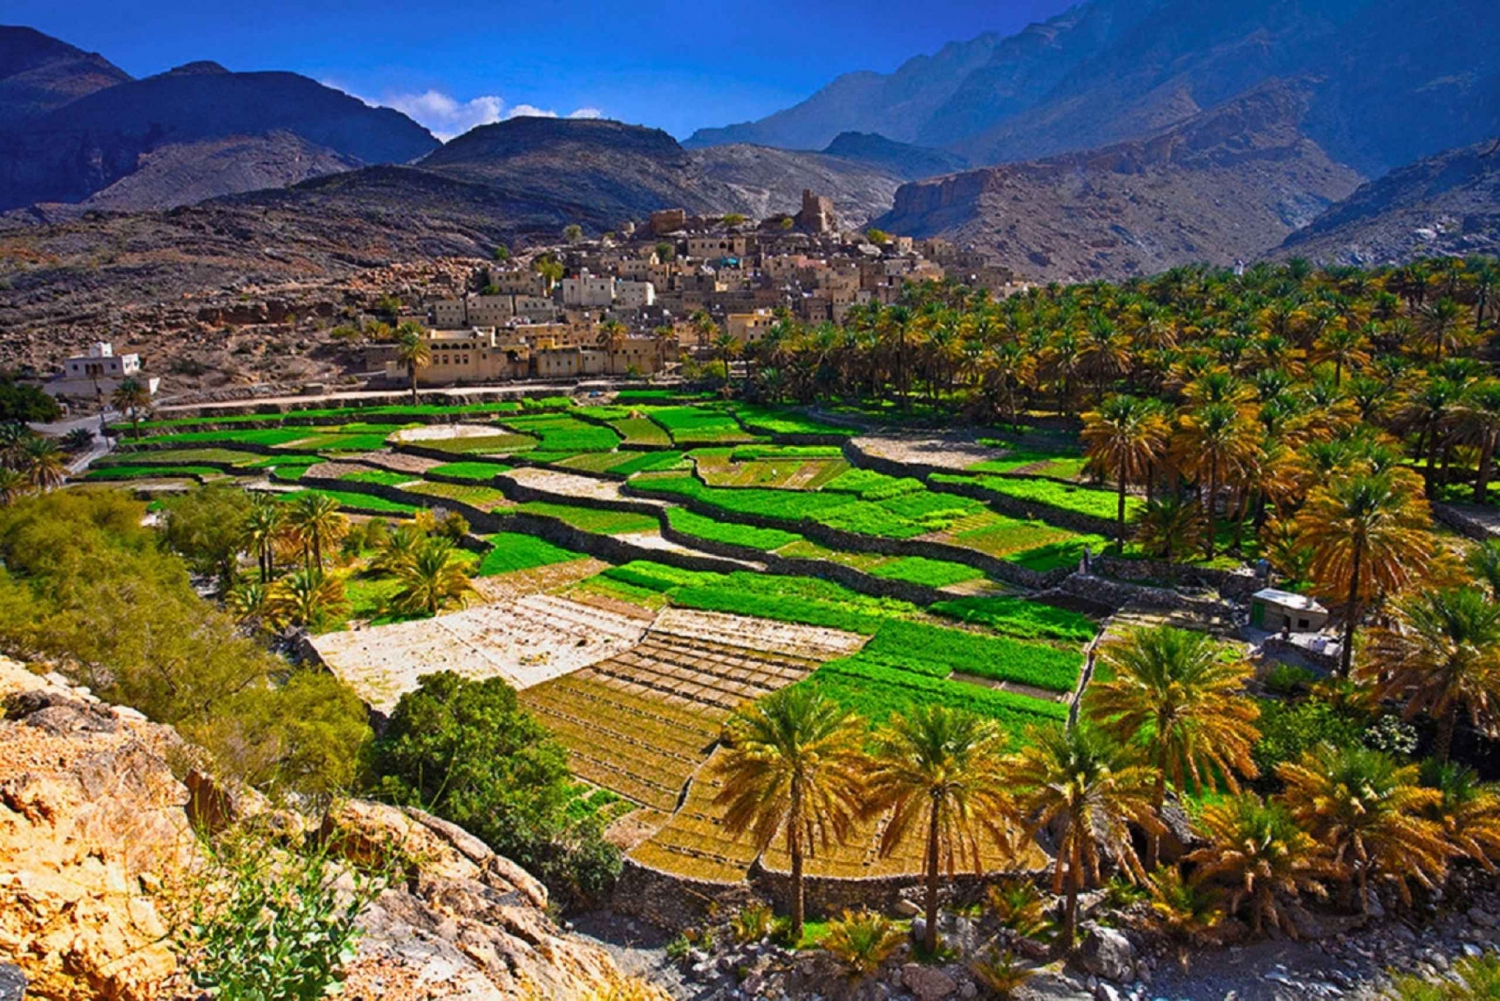 Oman: Muscat to Bilad Sayt 4WD Day Trip